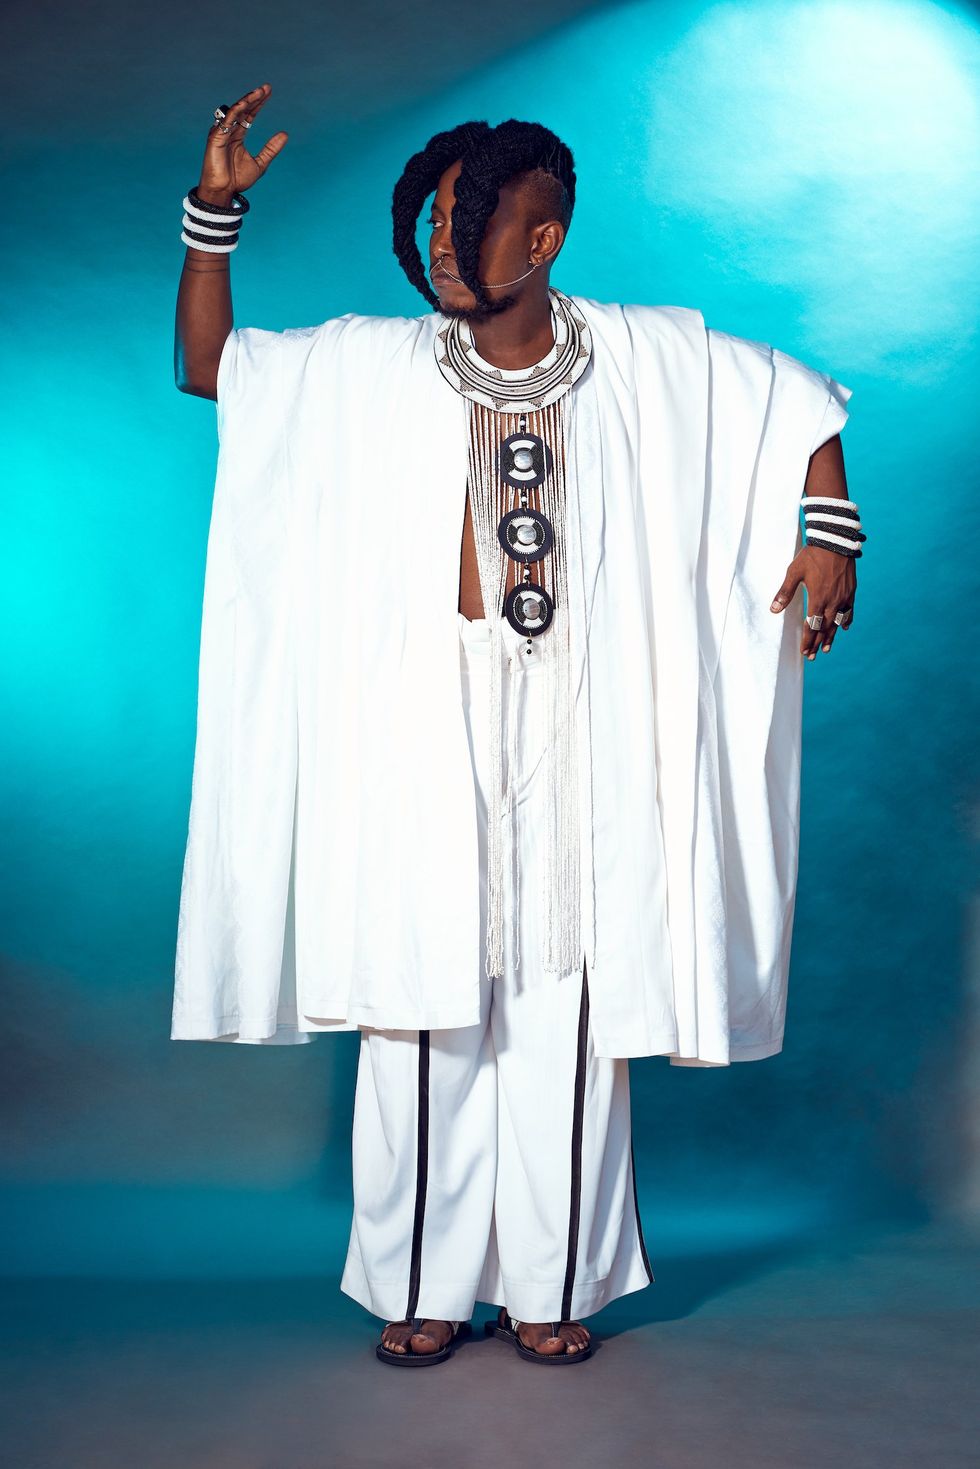 kenyan musician bensoul